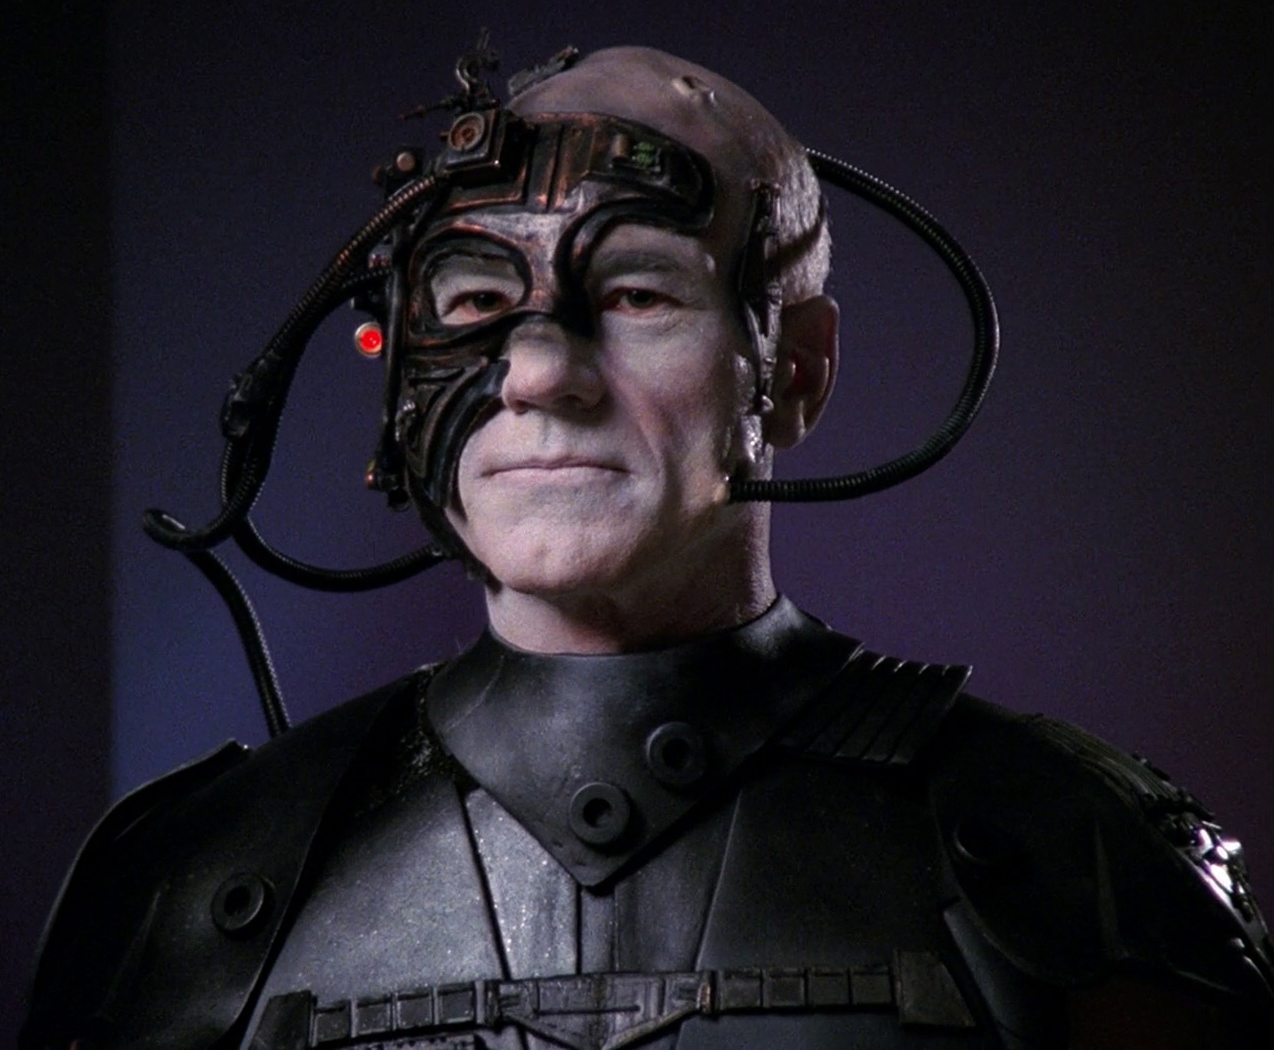 Locutus of Borg (Captain Jean-luc Picard)